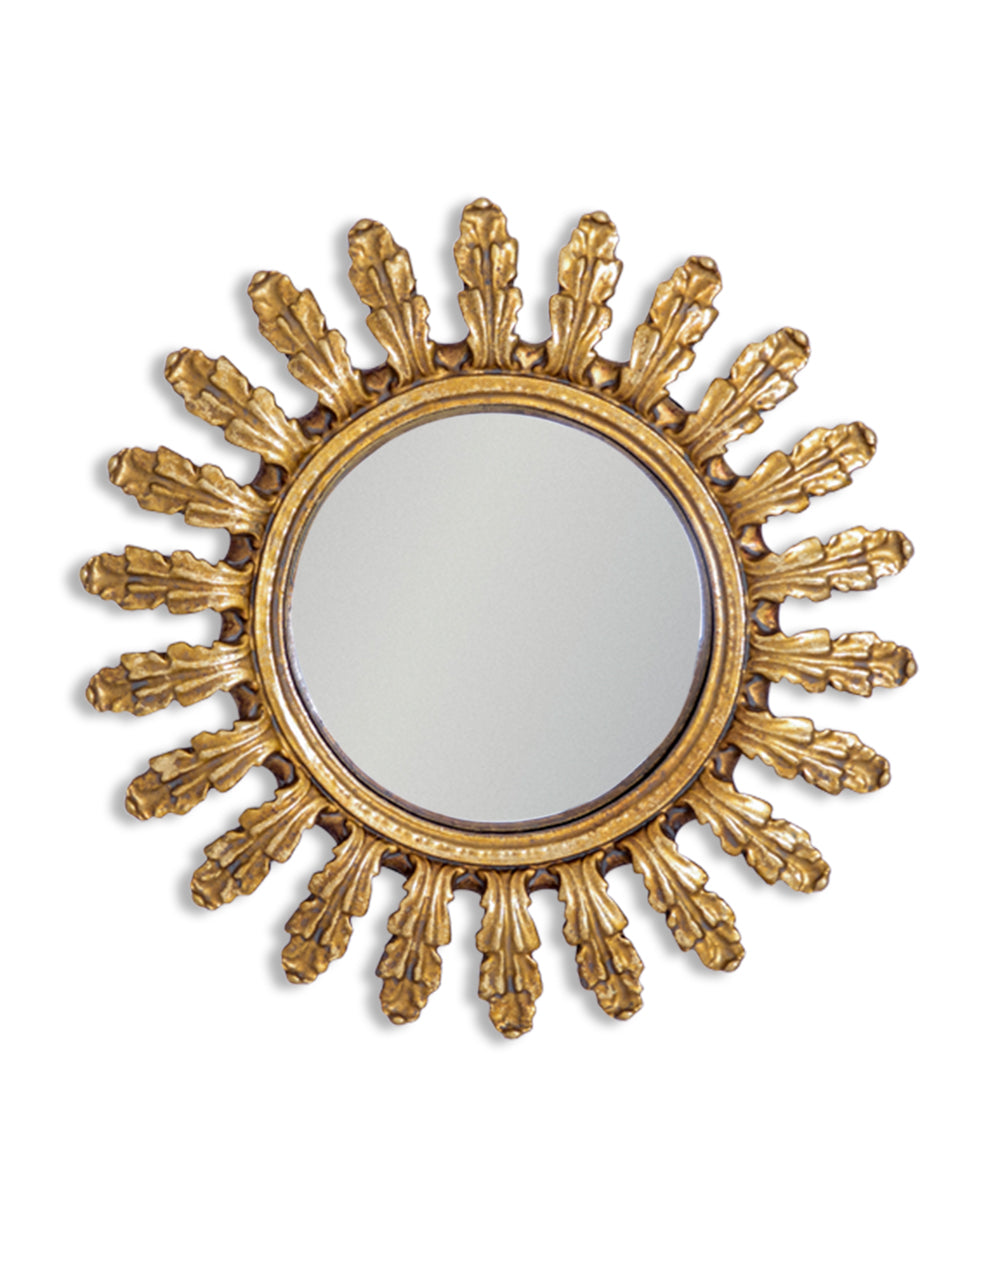 Antique Gold Decorative Frame Convex Mirror